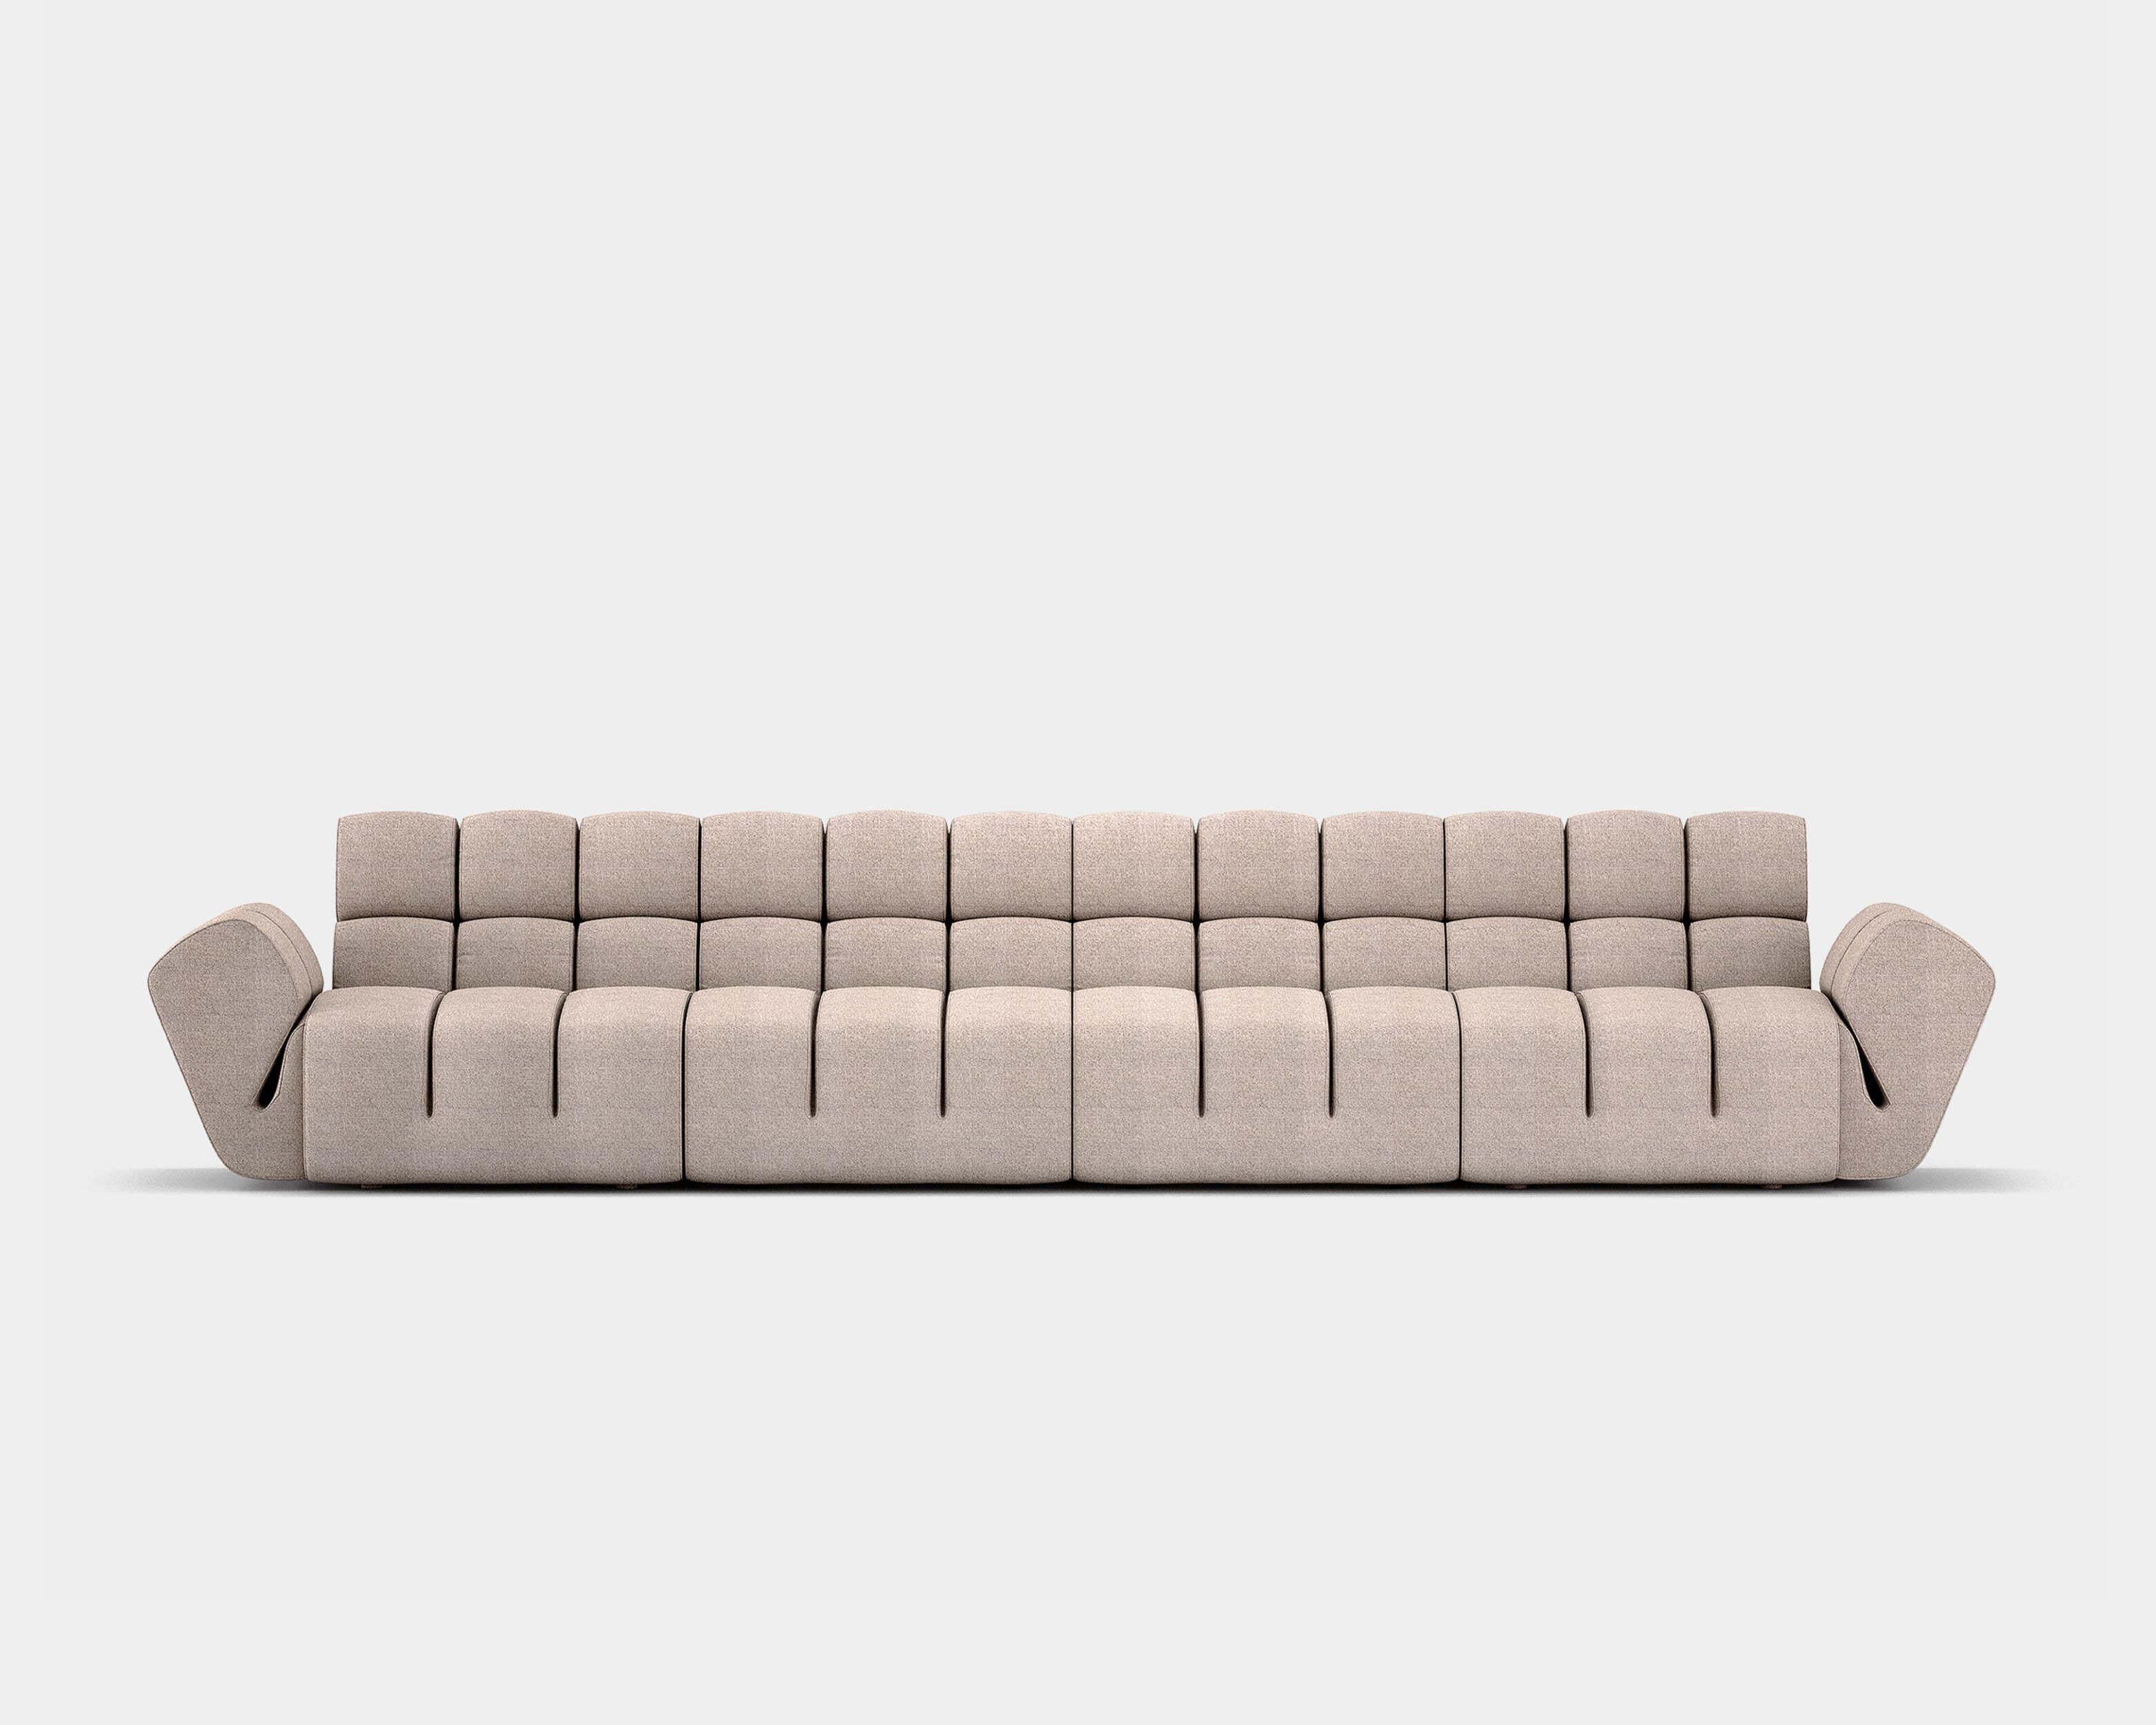 Italian Contemporary Sectional Sofa 'Palmo' by Amura Lab, Brera 850, Ref. 13 For Sale